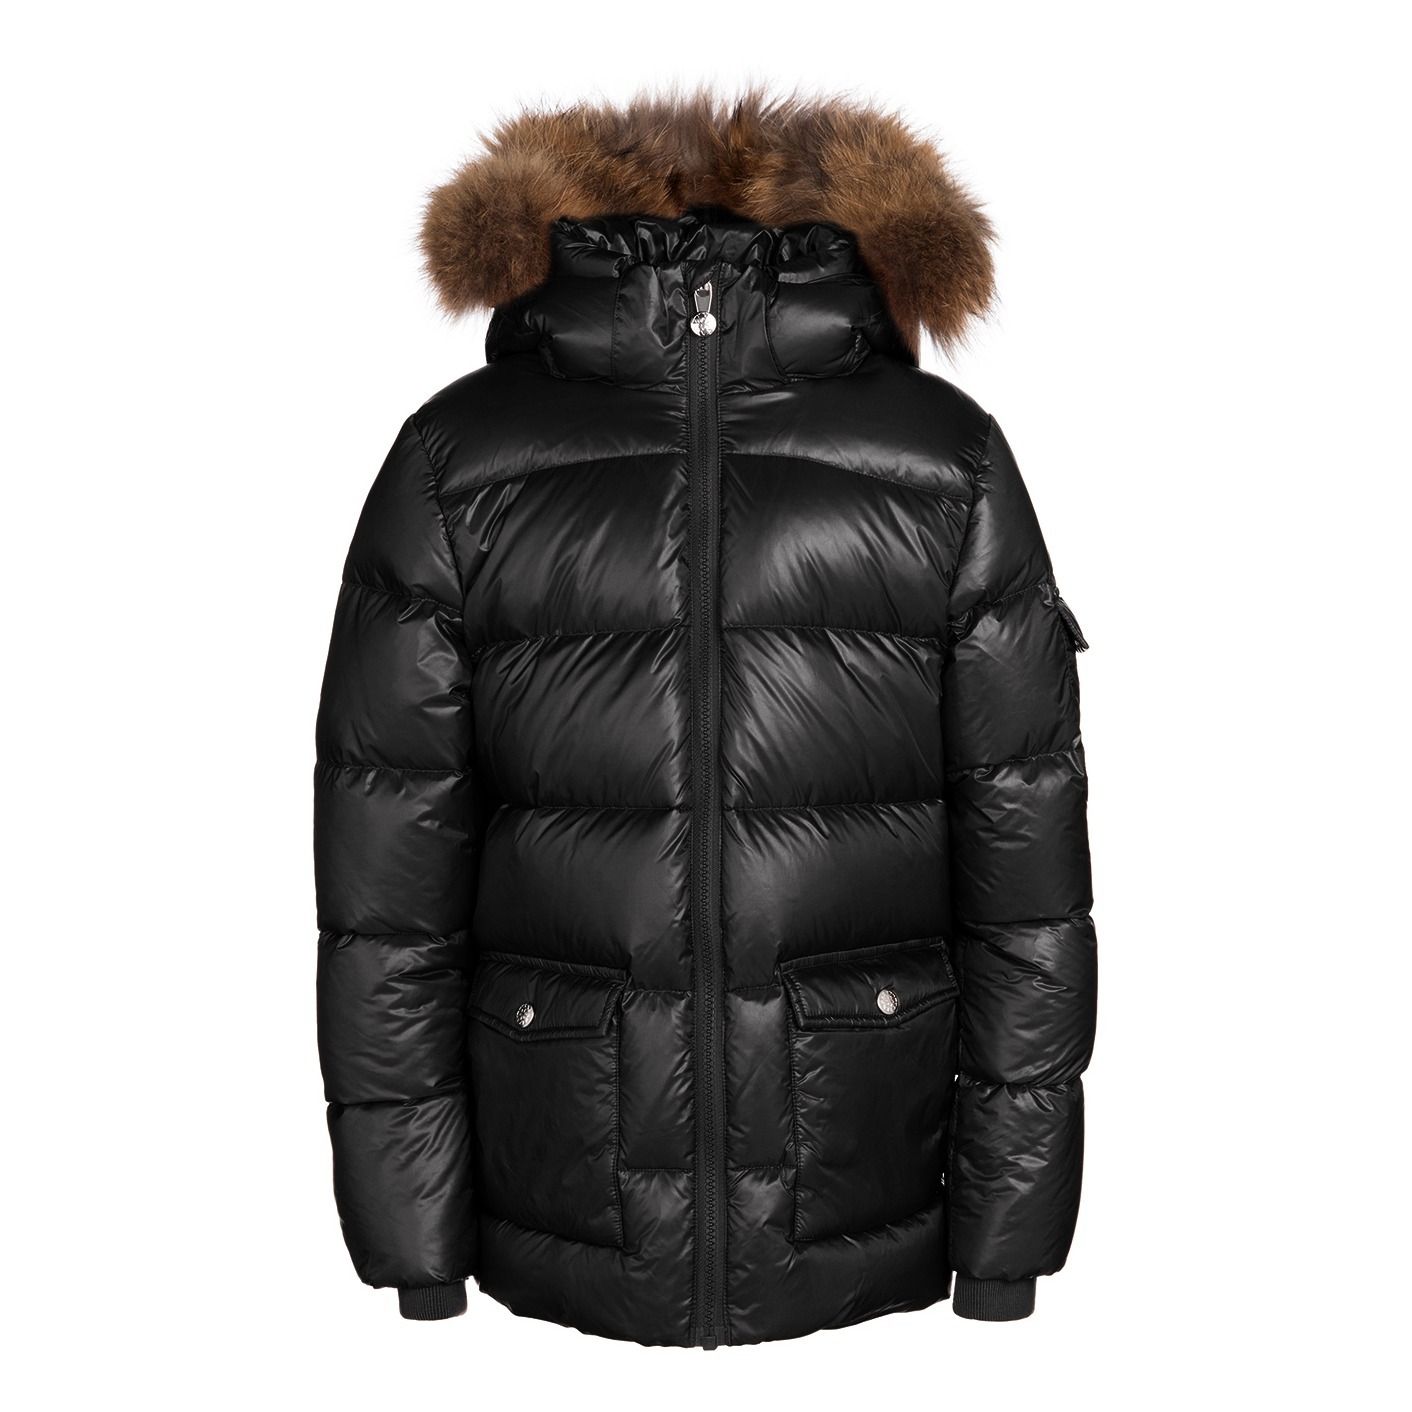 Authentic Shiny Fur Down Jacket Black Pyrenex Fashion Teen